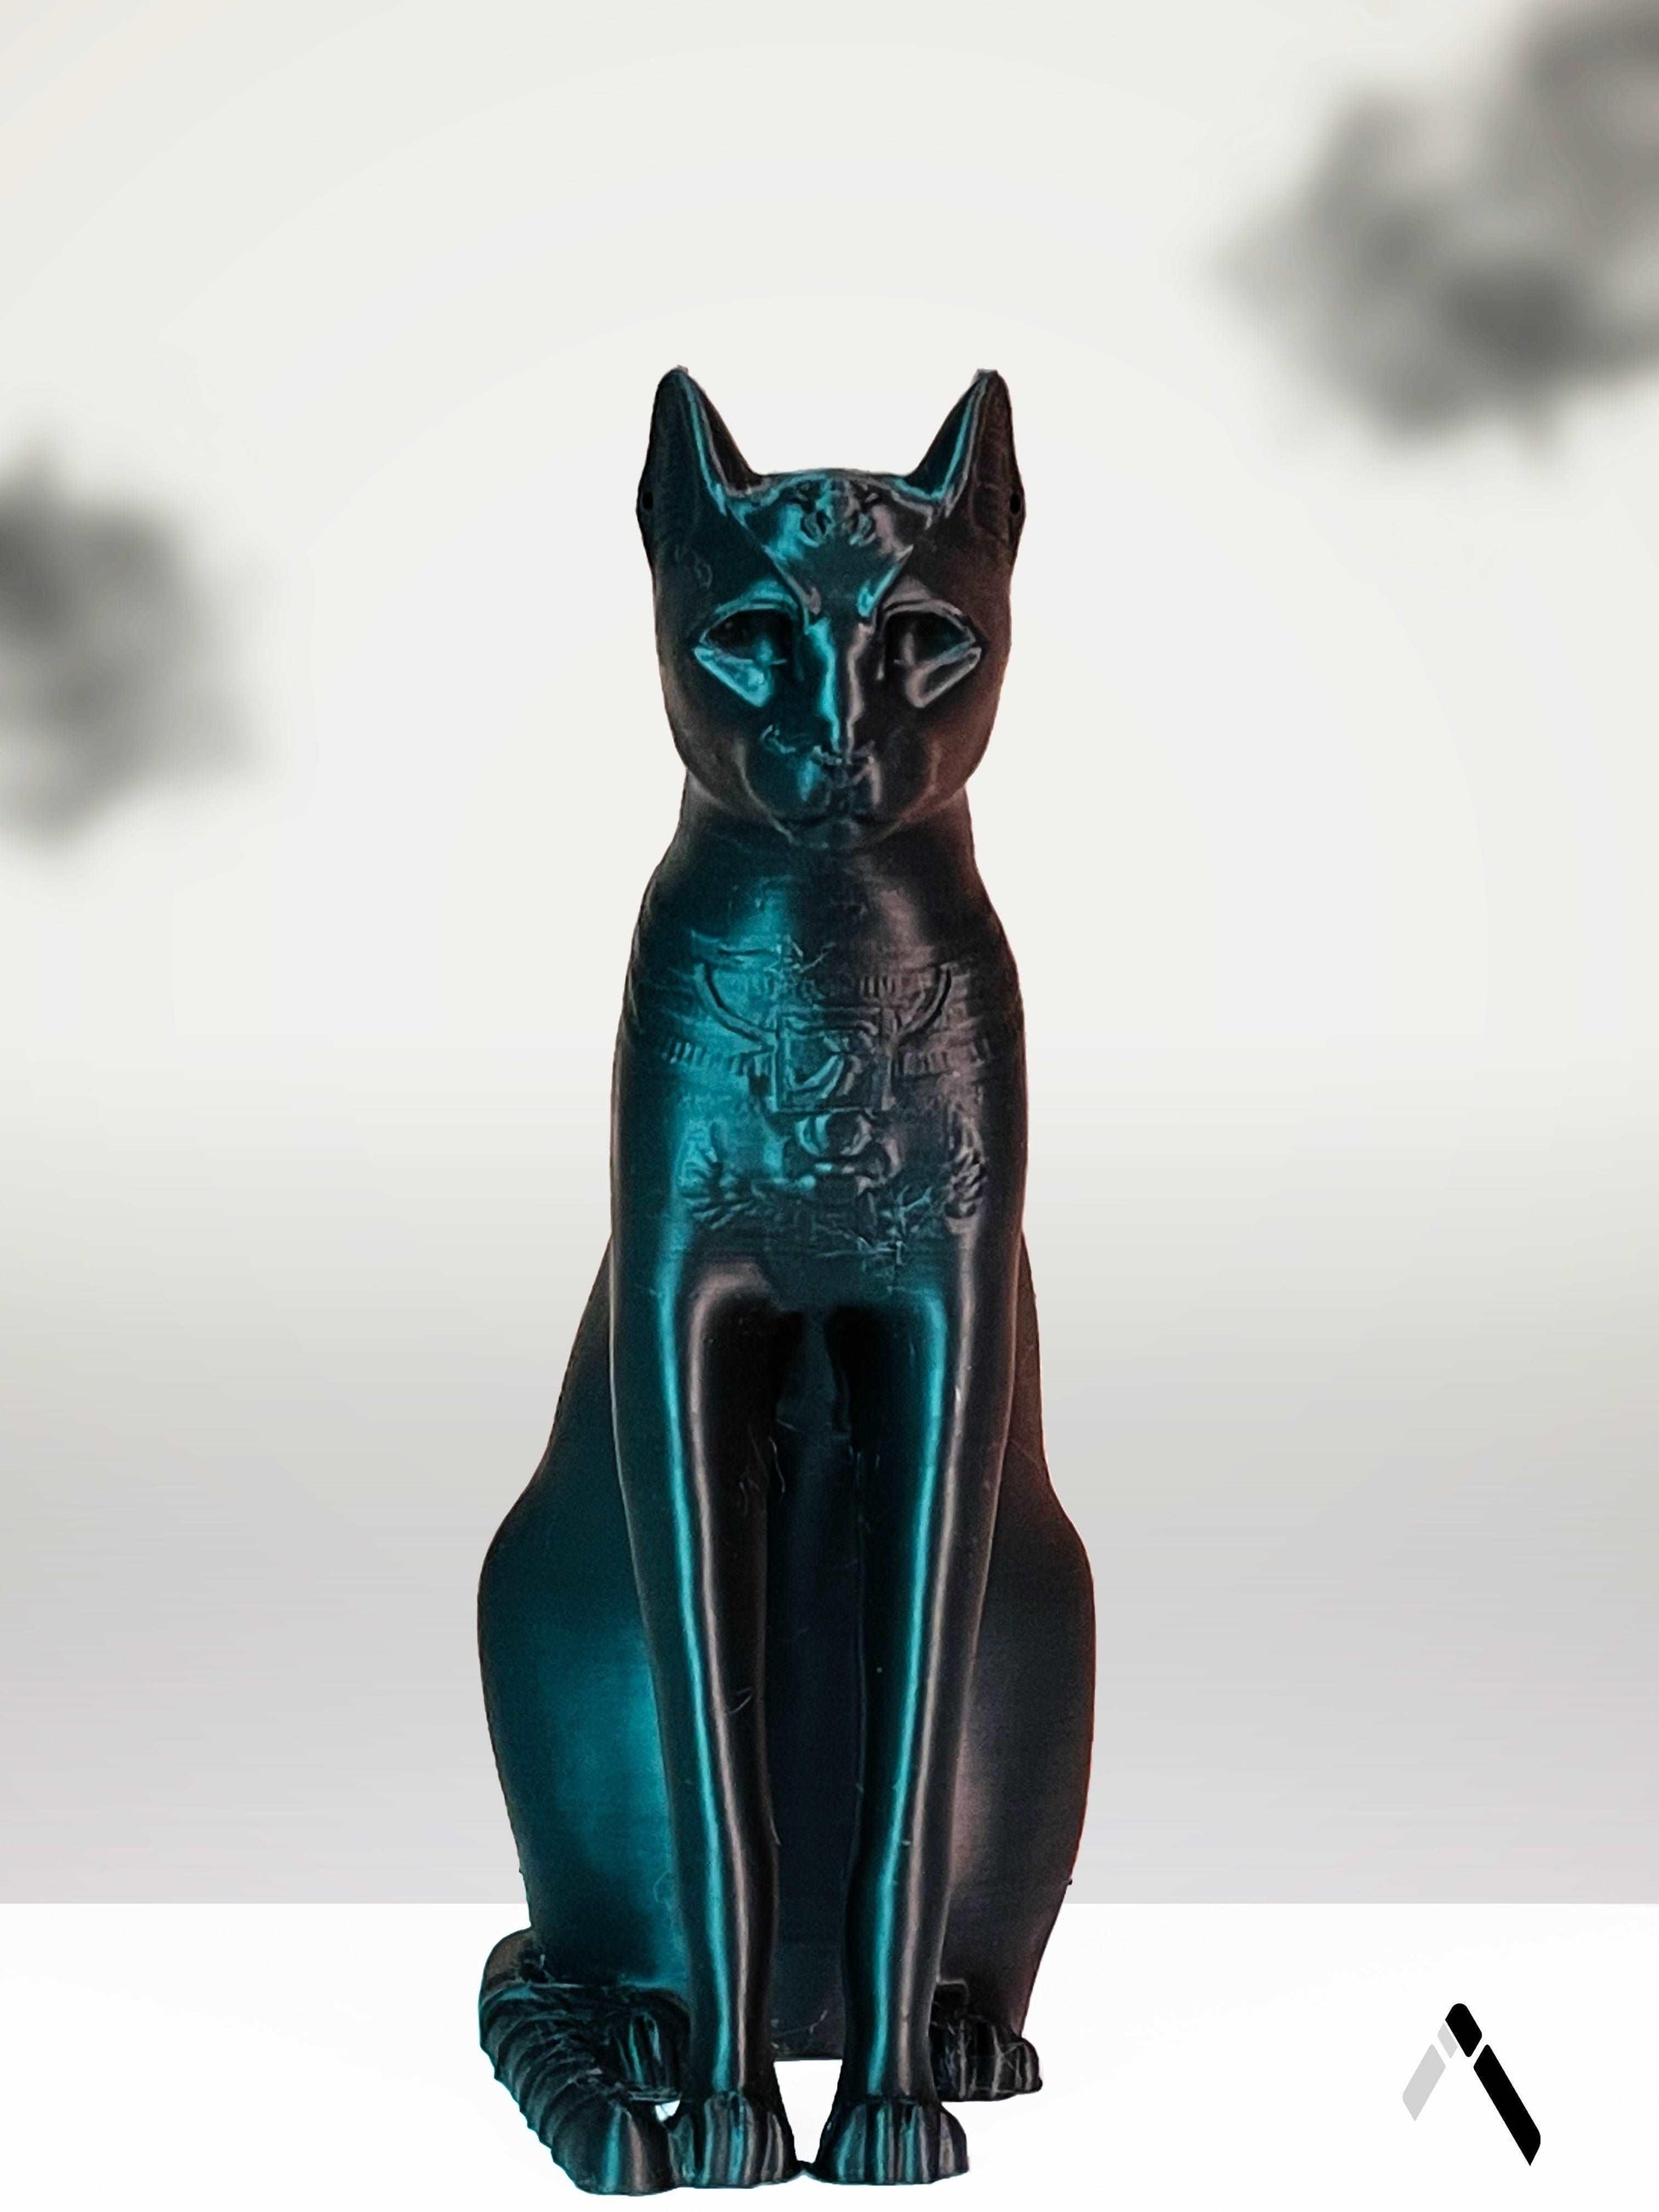 Egyptian Cat Statue Archadia